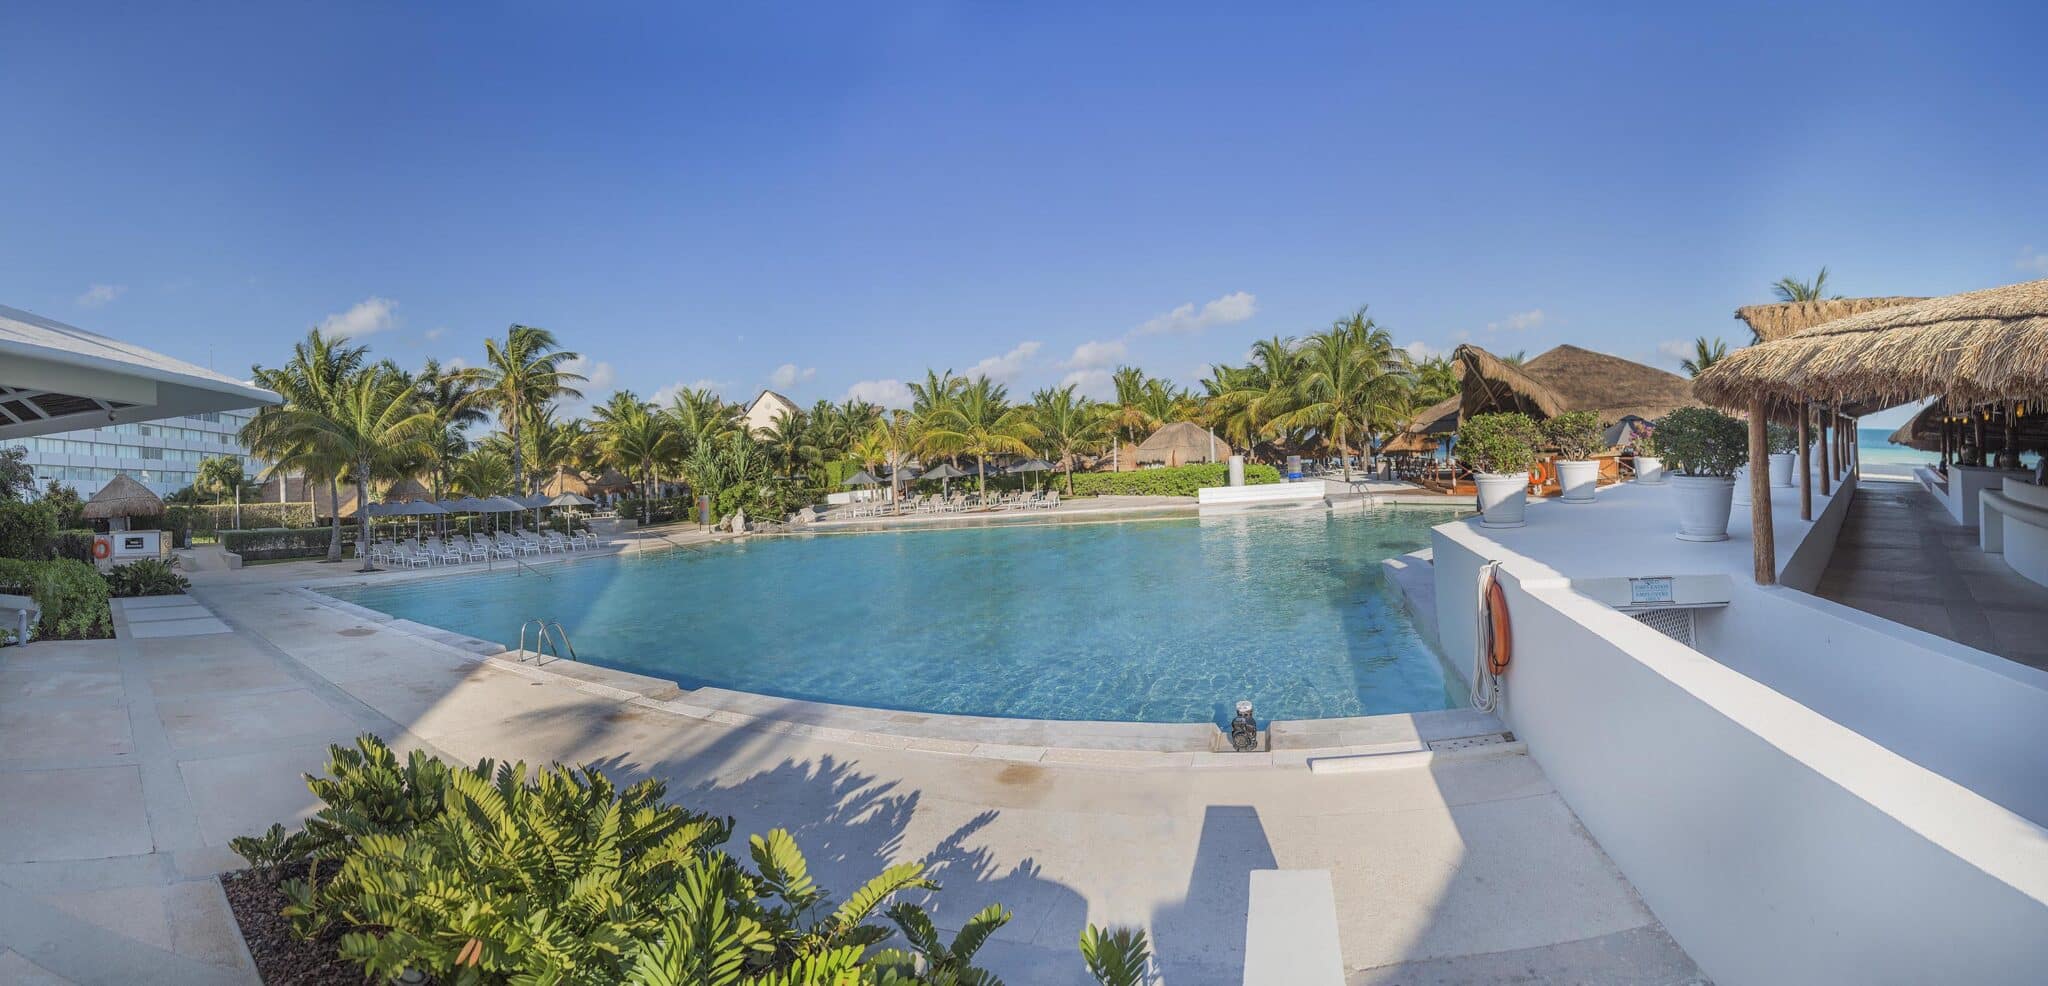 Presidente Cancun Resort’s pool area